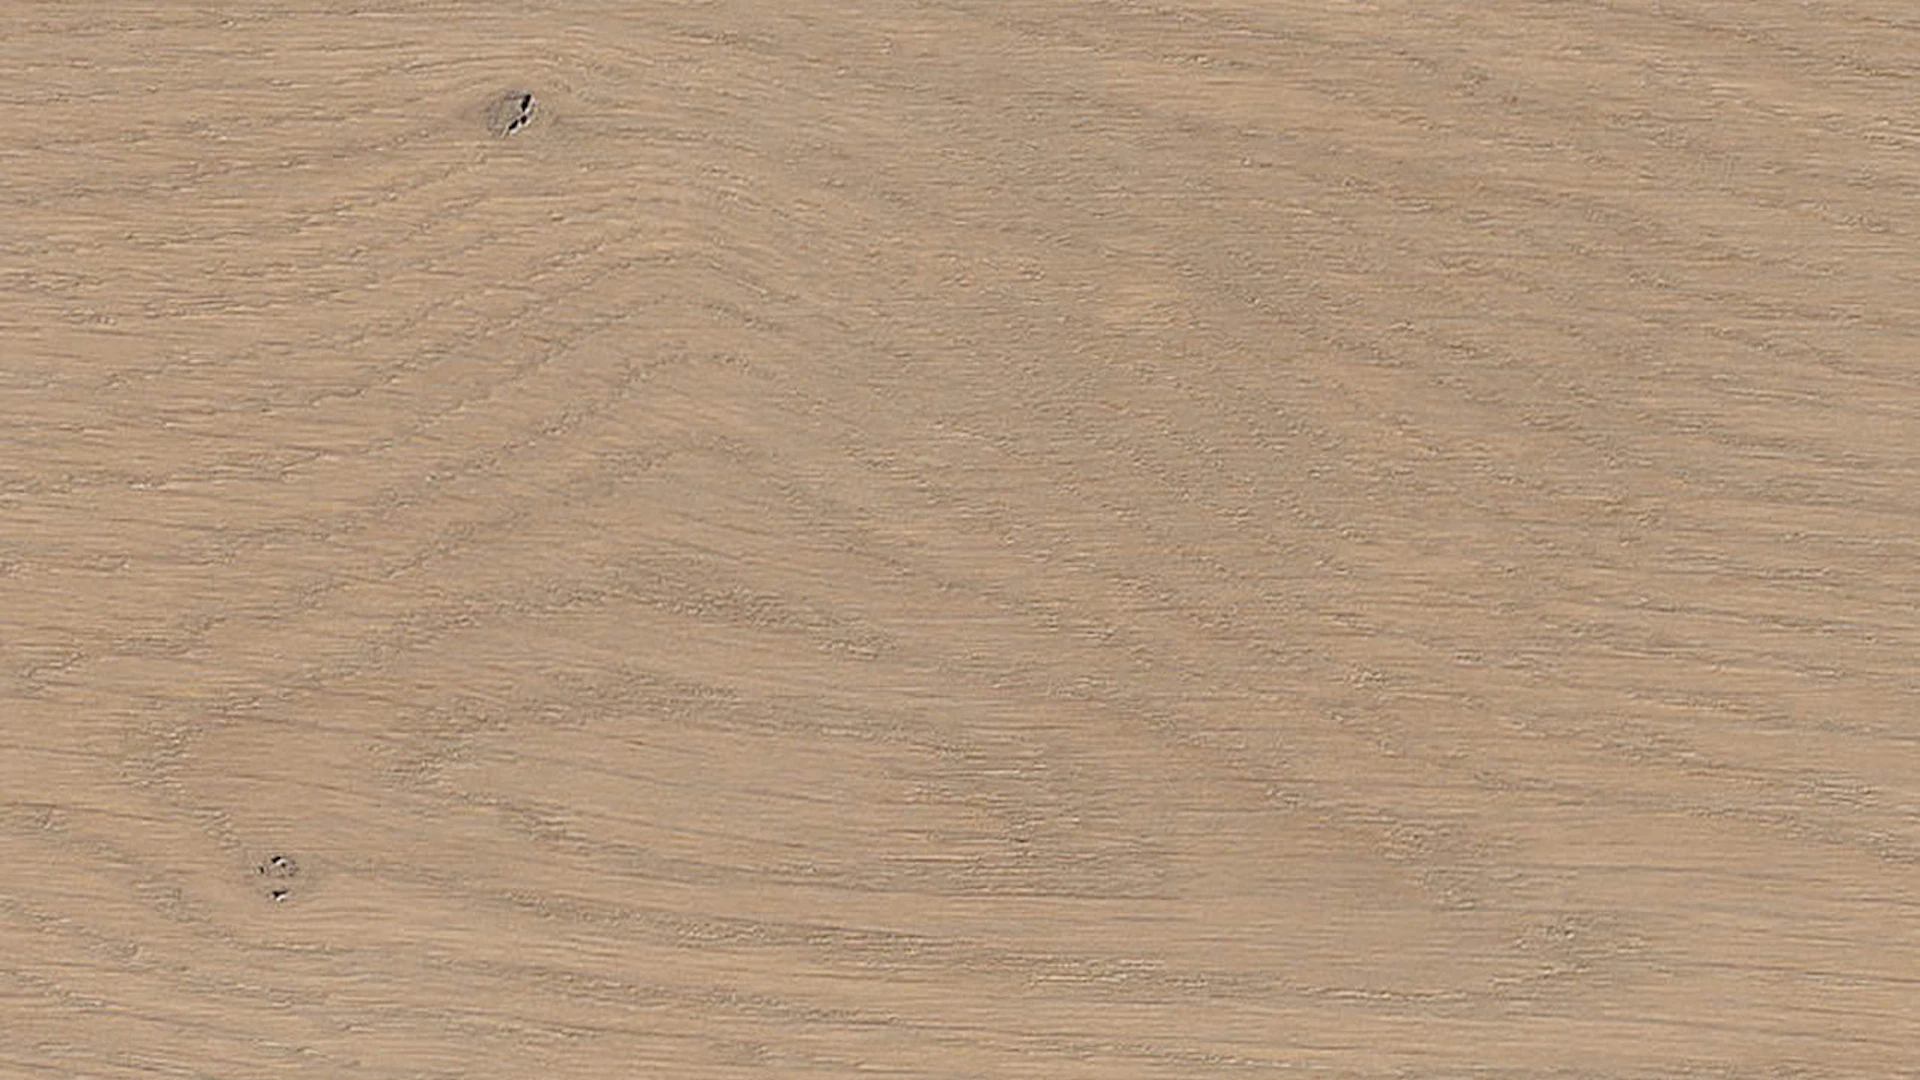 Haro Parquet Flooring - Series 4000 Stab Prestige naturaDur Oak sand gray Markant (540158)